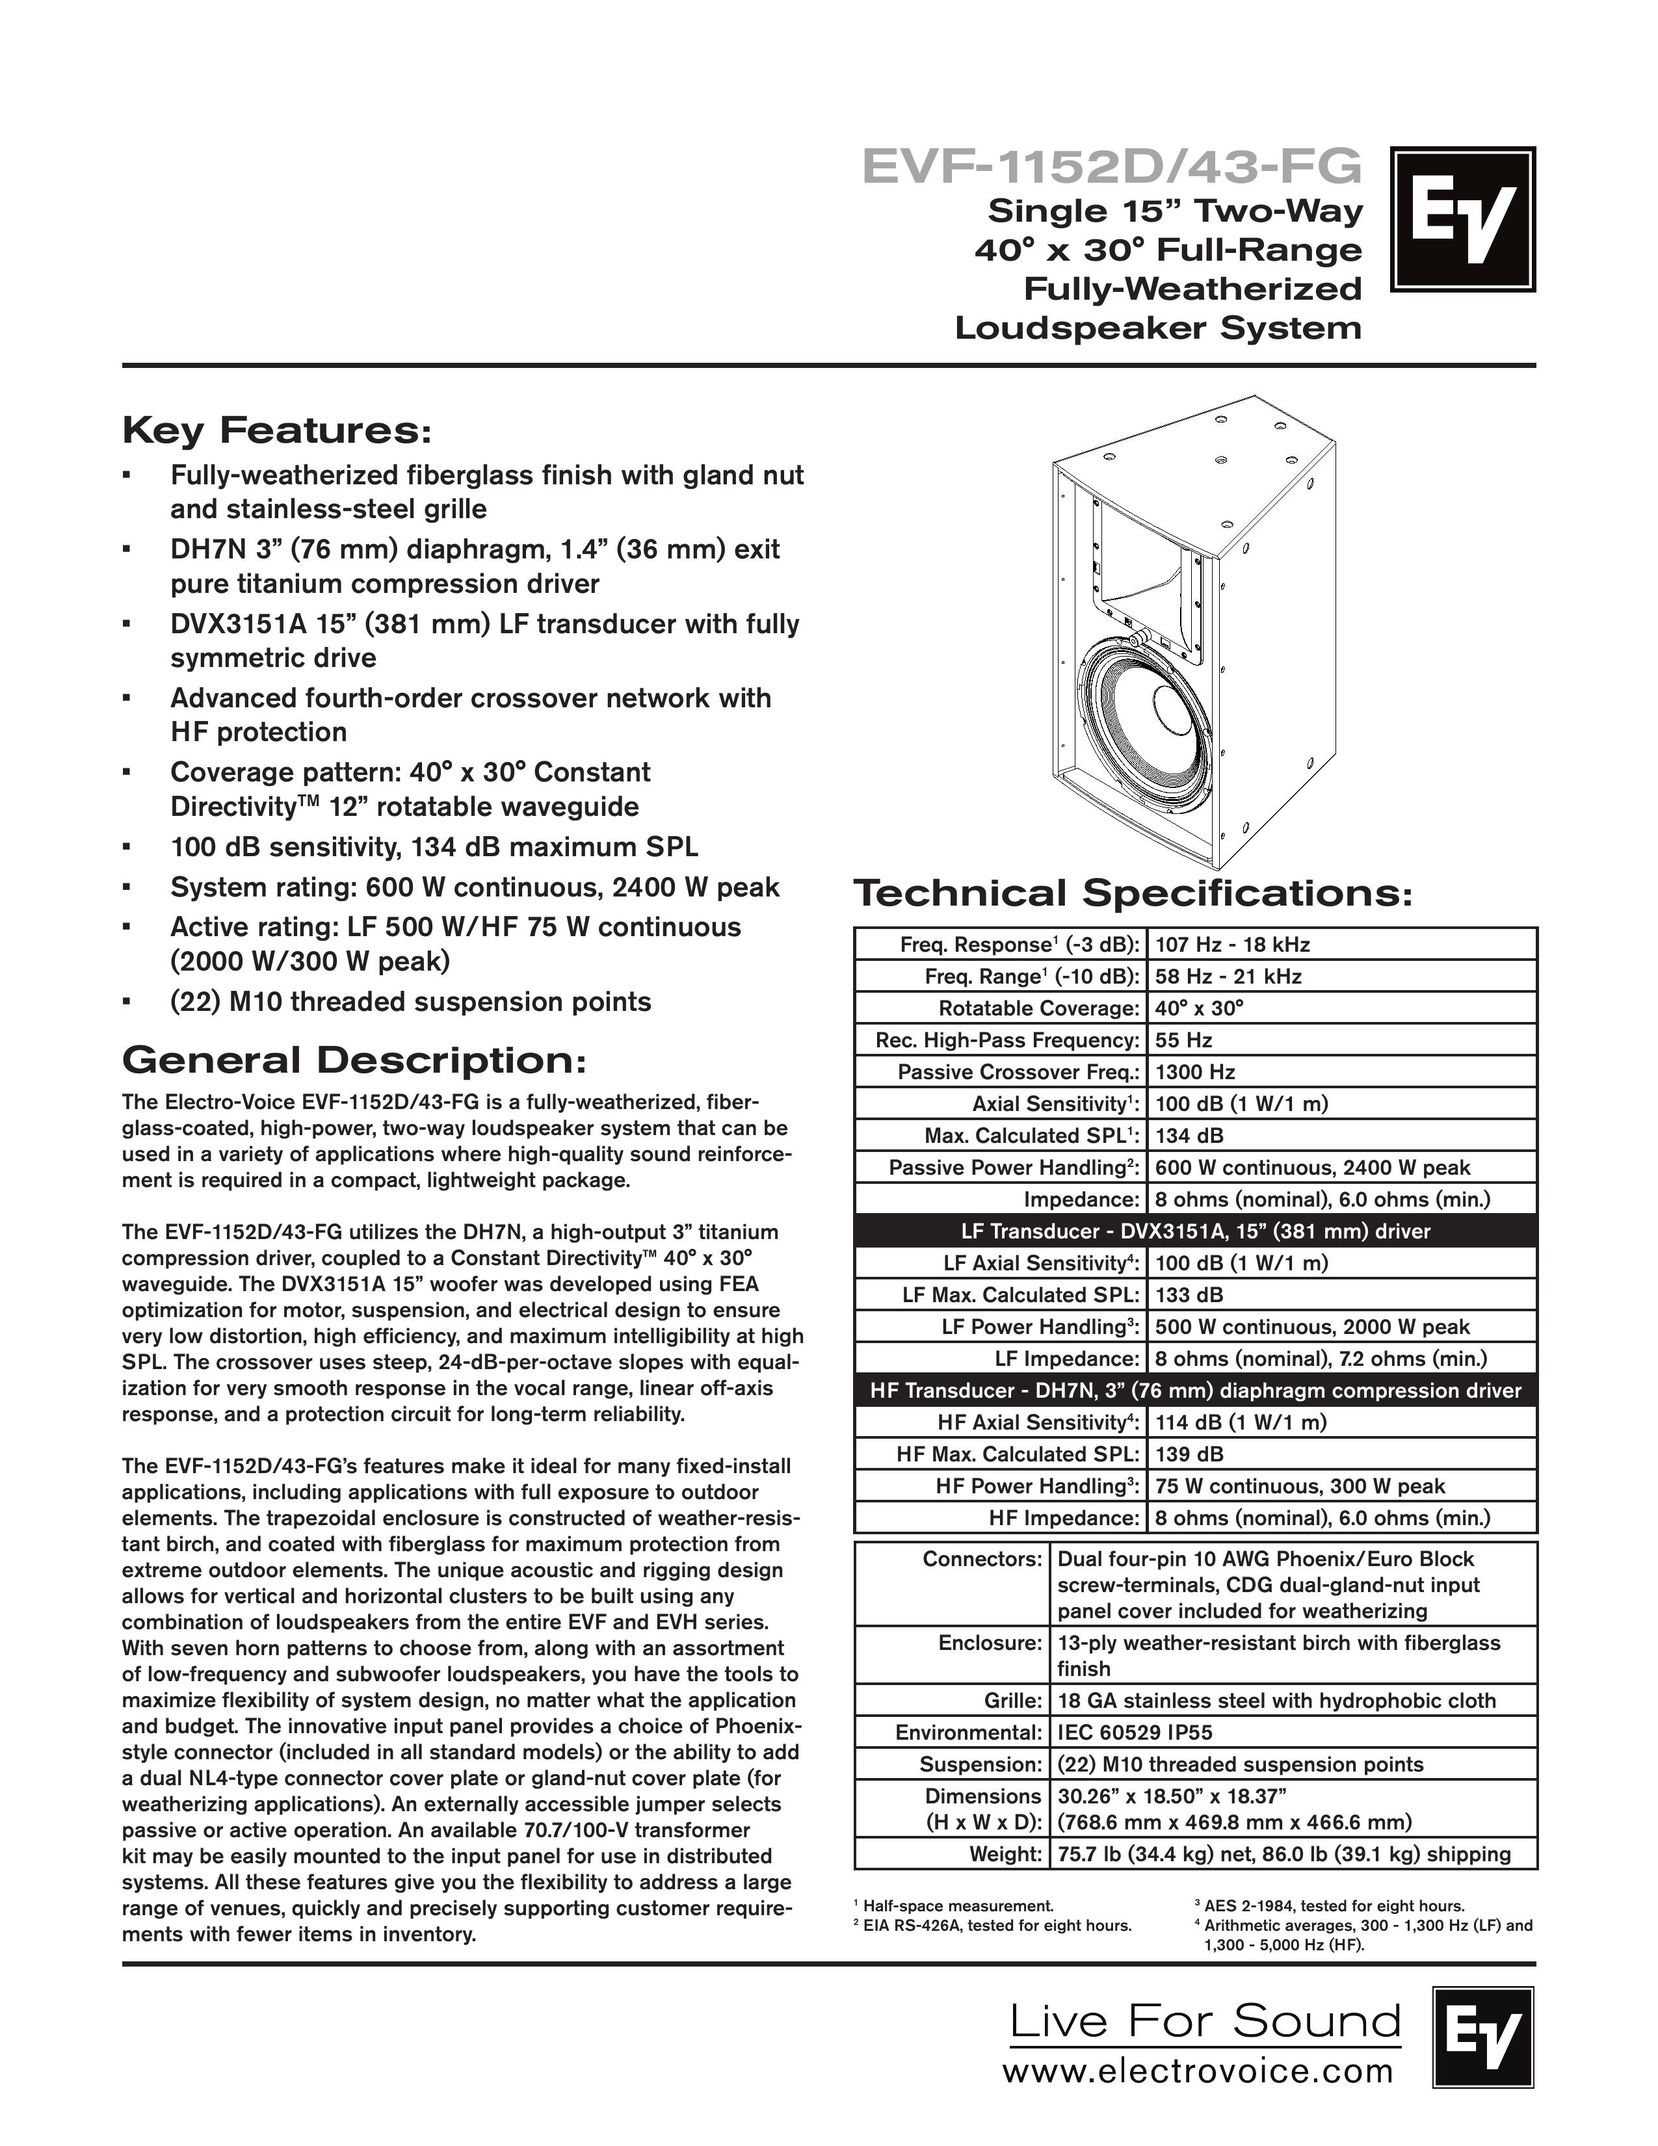 Bosch Appliances EVF-1152D/43-FG Speaker System User Manual